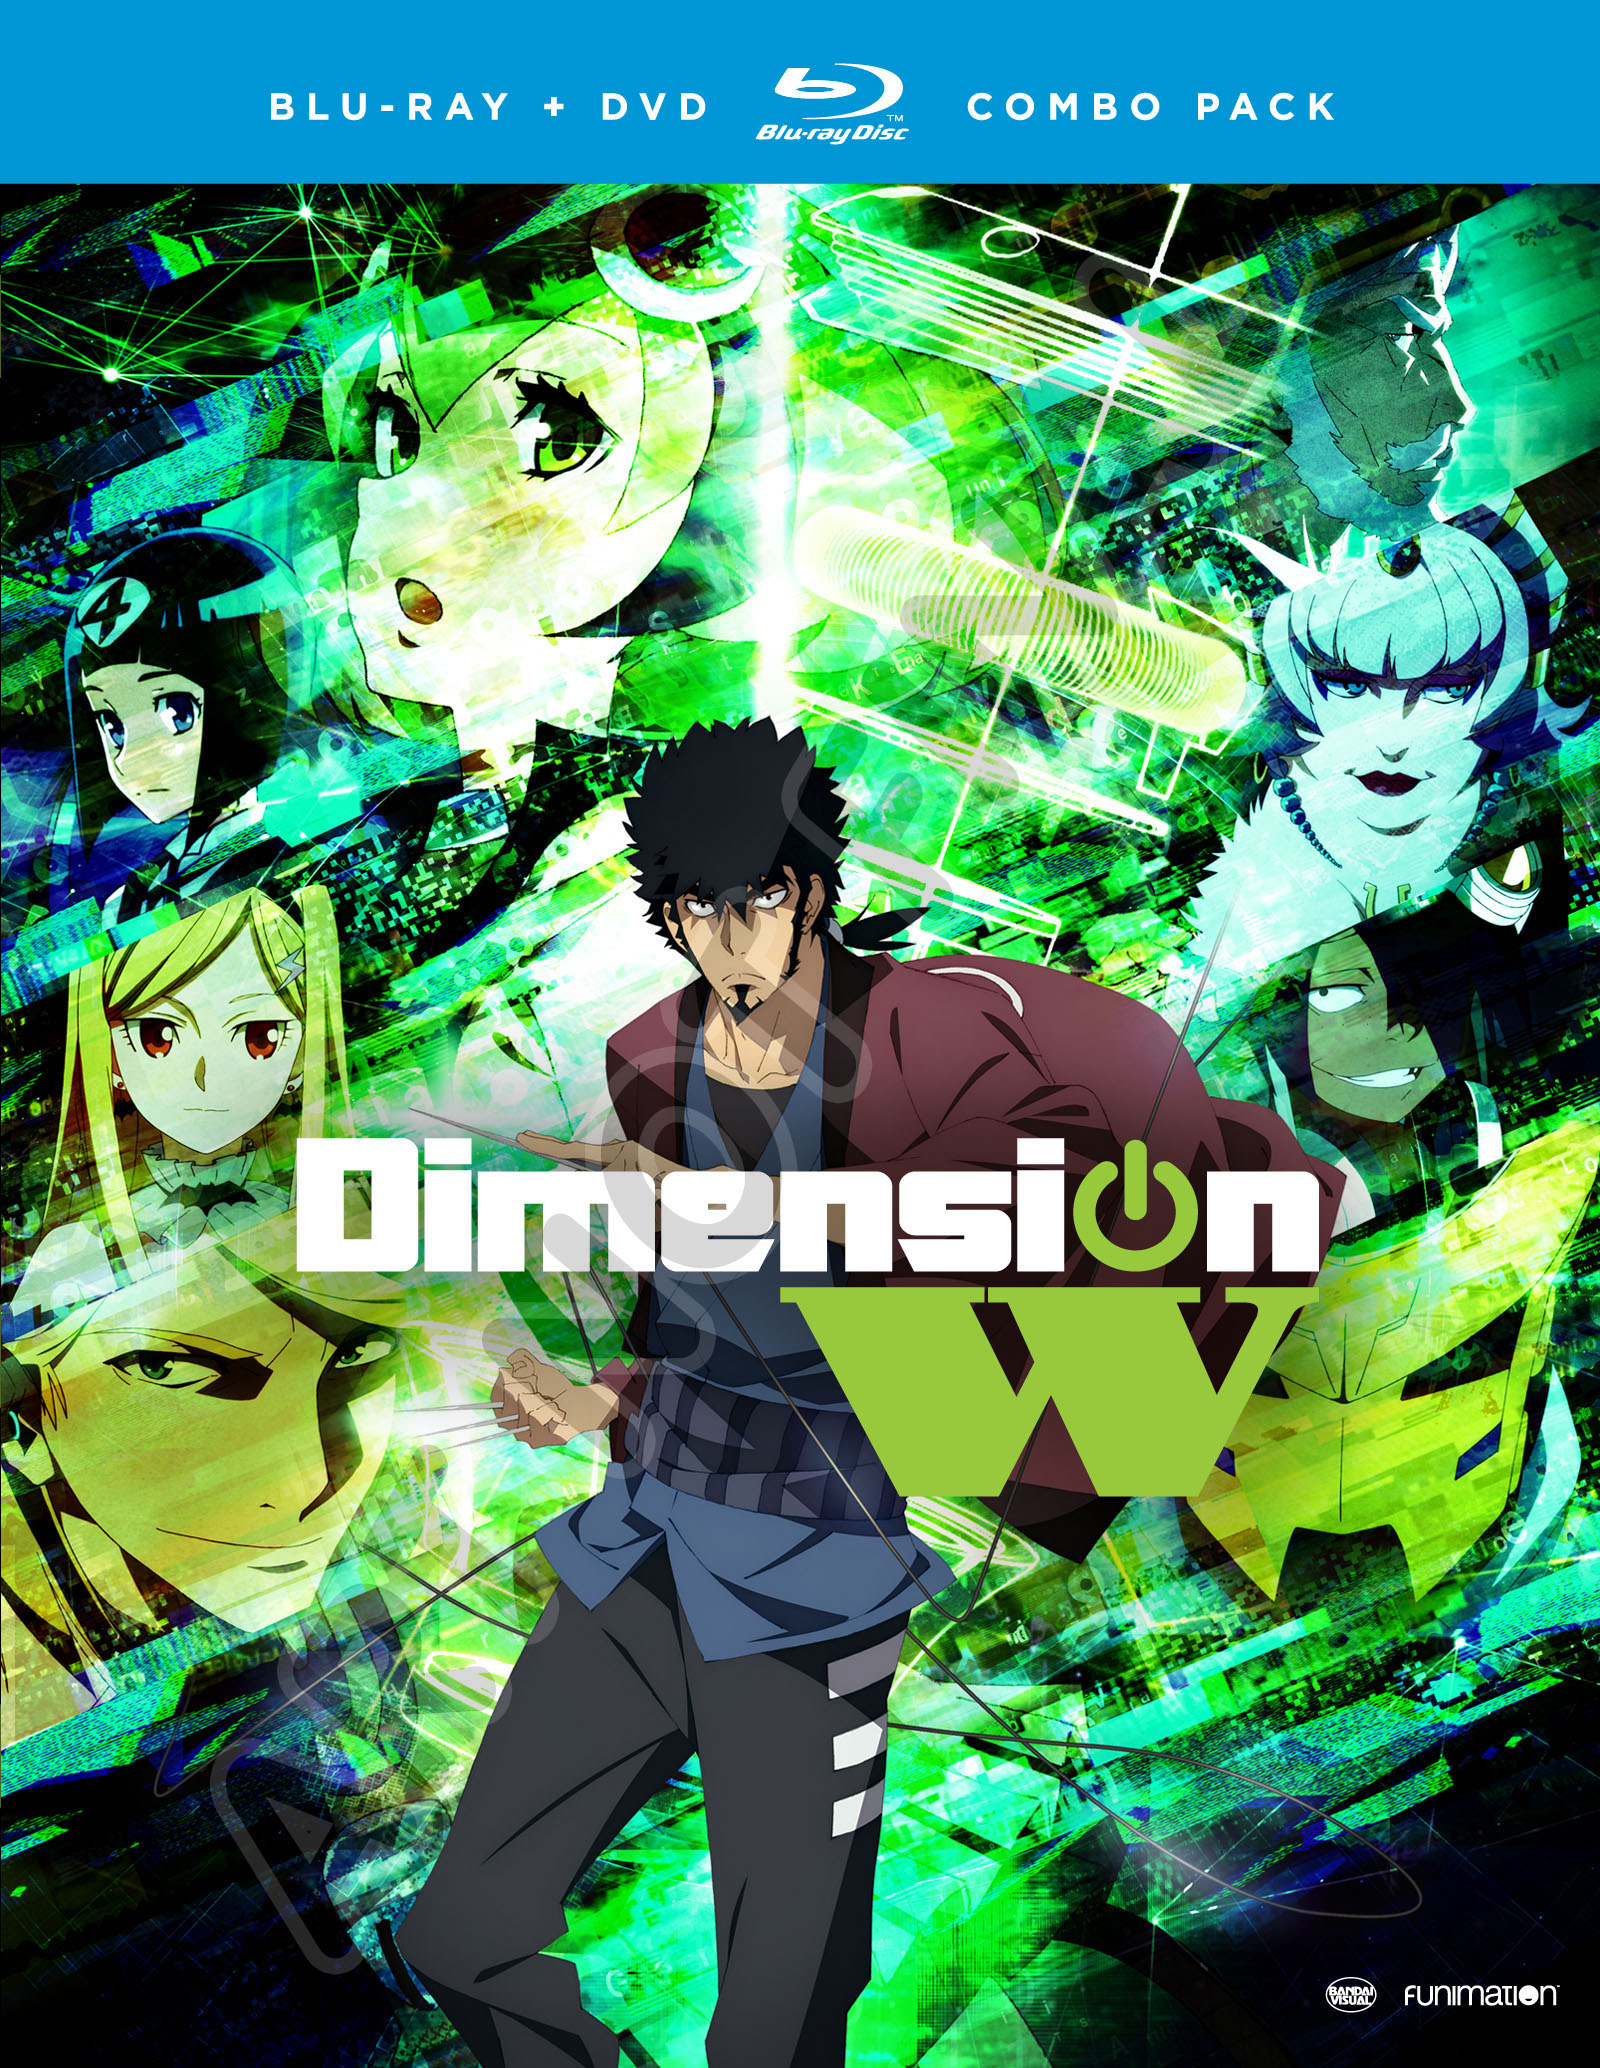 Dimension W - Season 1 - Blu-ray + DVD image count 0